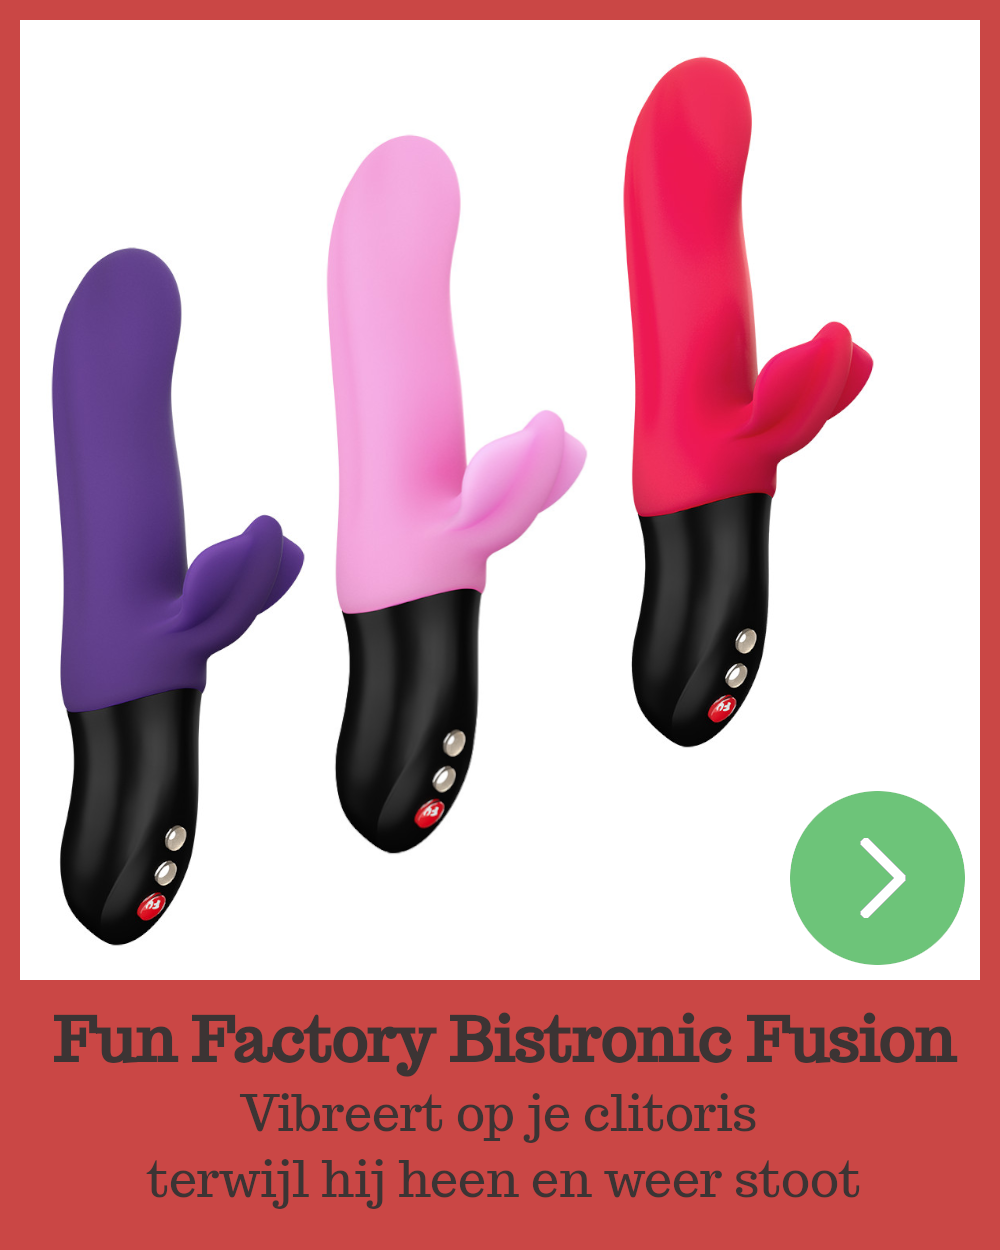 Fun Factory Bistronic Fusion: Pulsator met clitorisvibrator